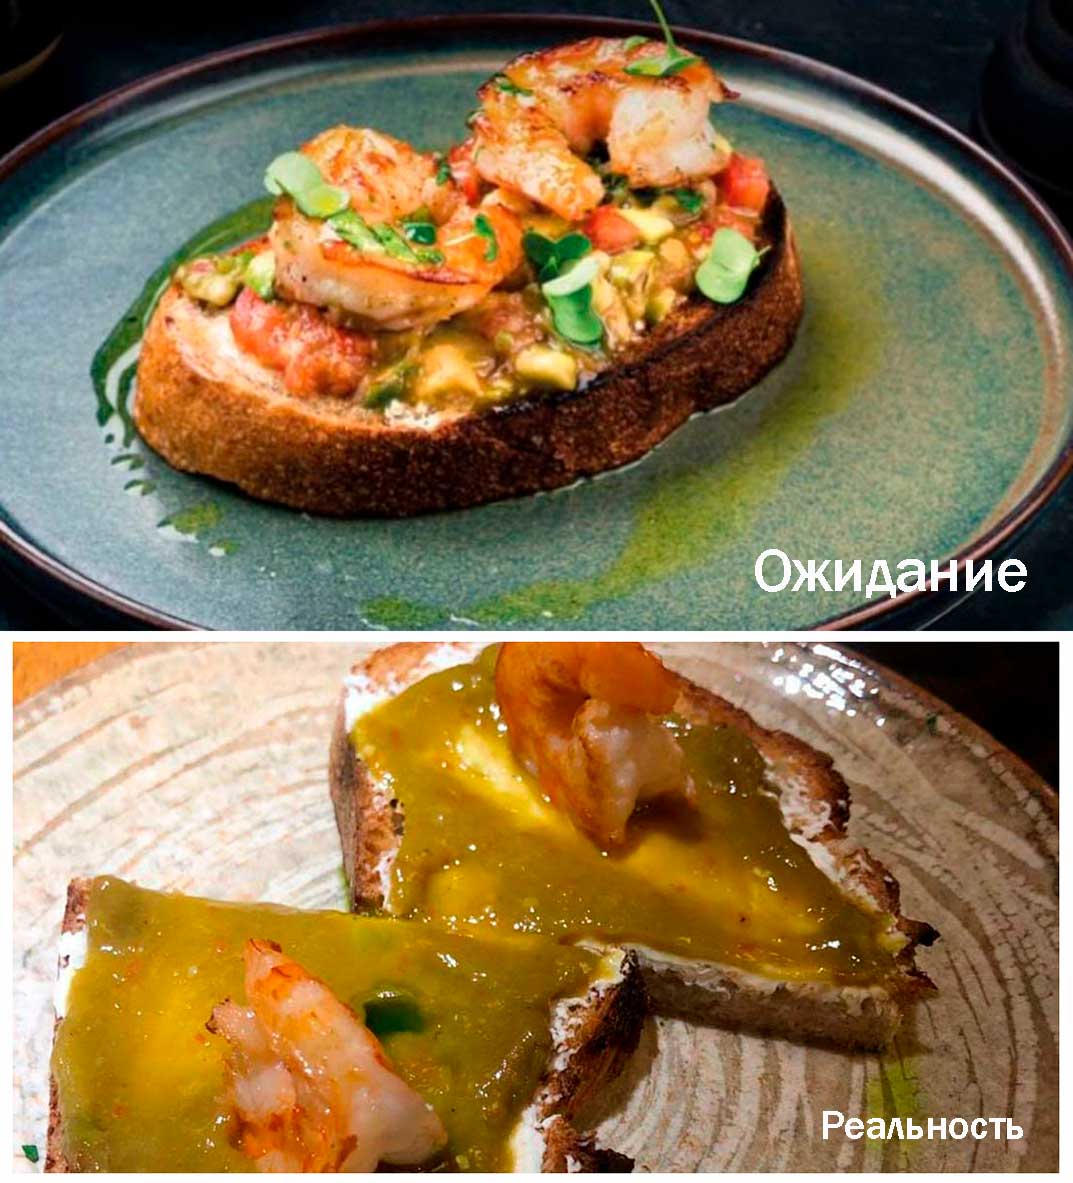 белоруска заказала в ресторане брускетты